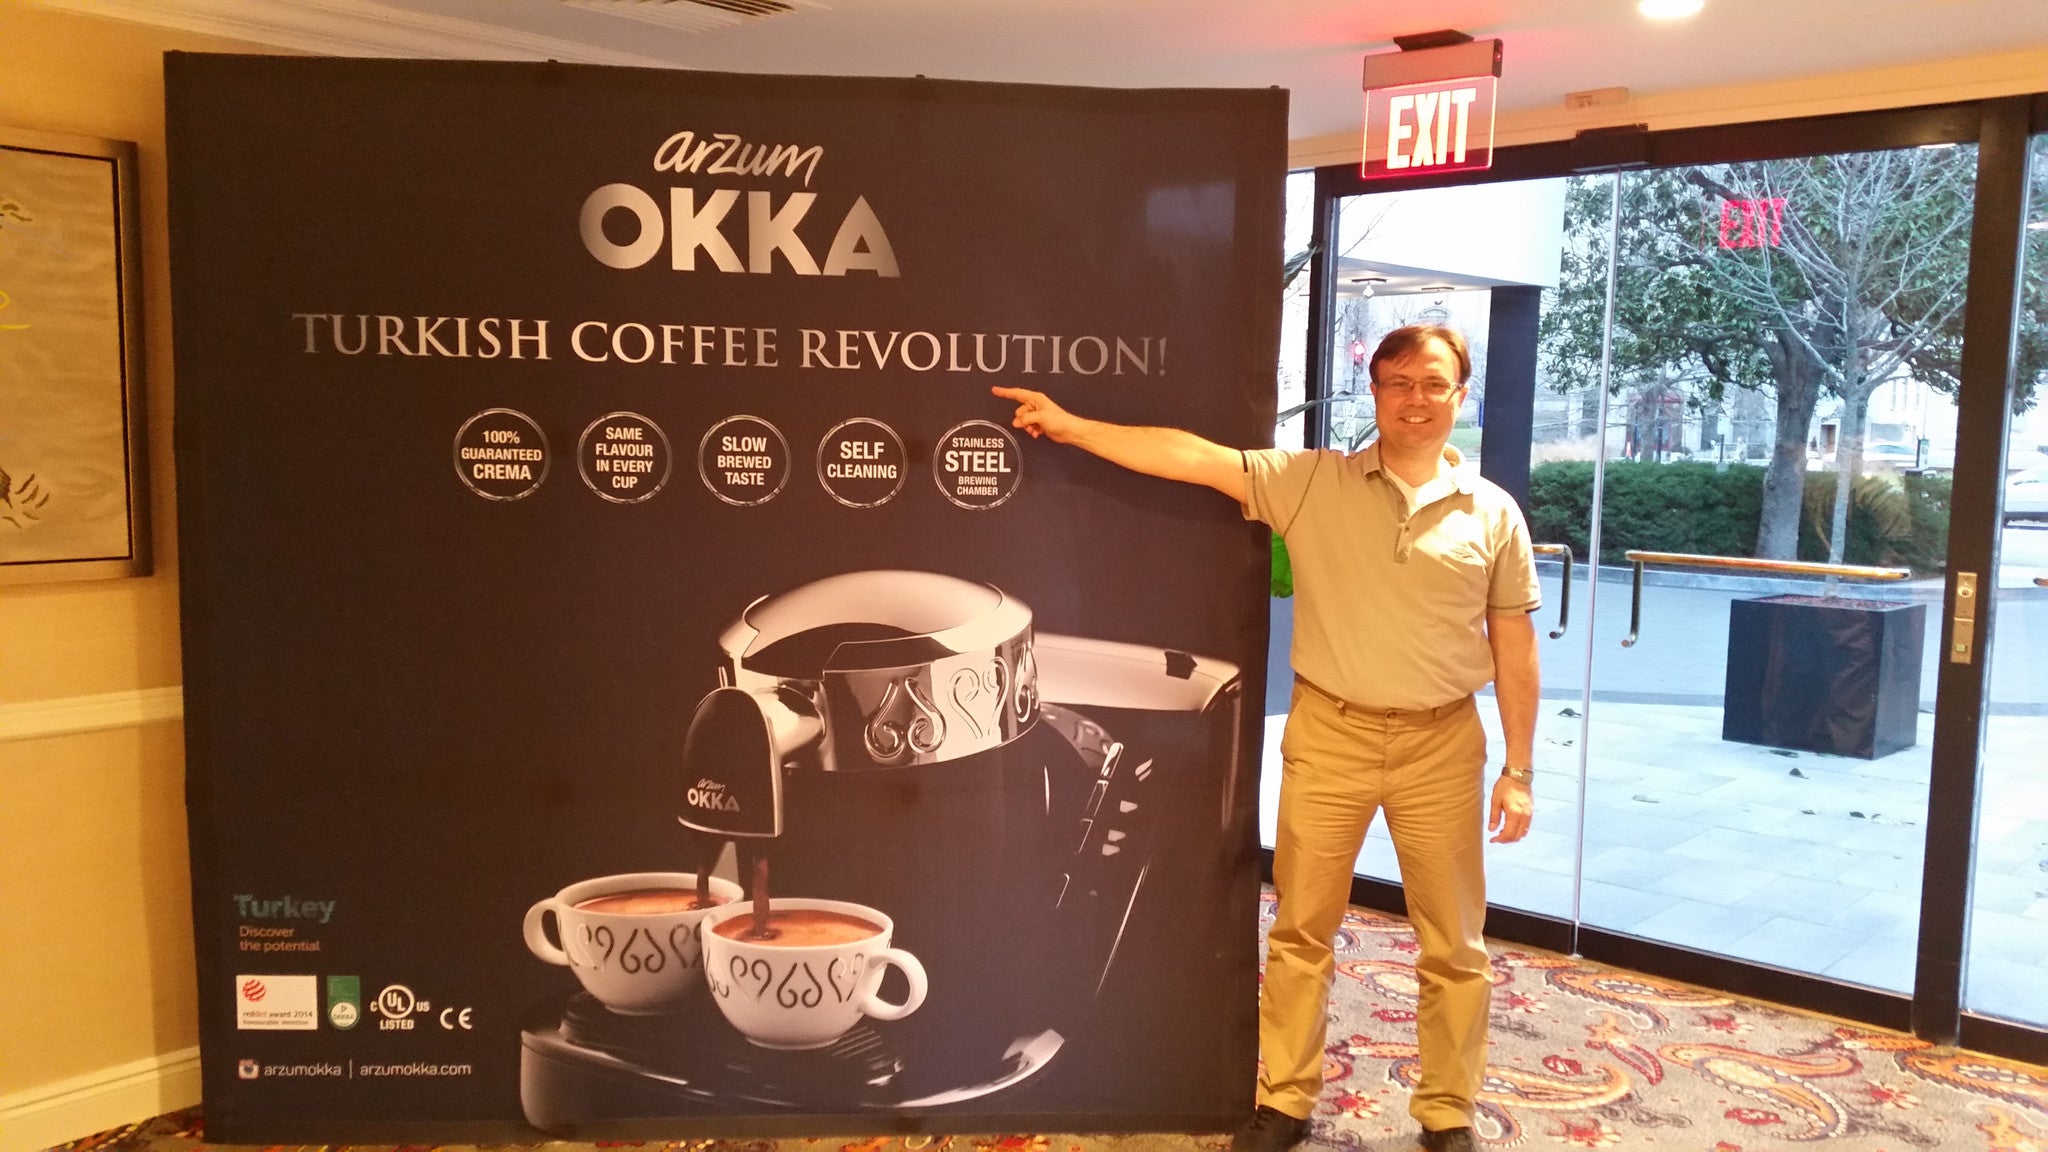 Turkish Coffee Revolution starts in the USA